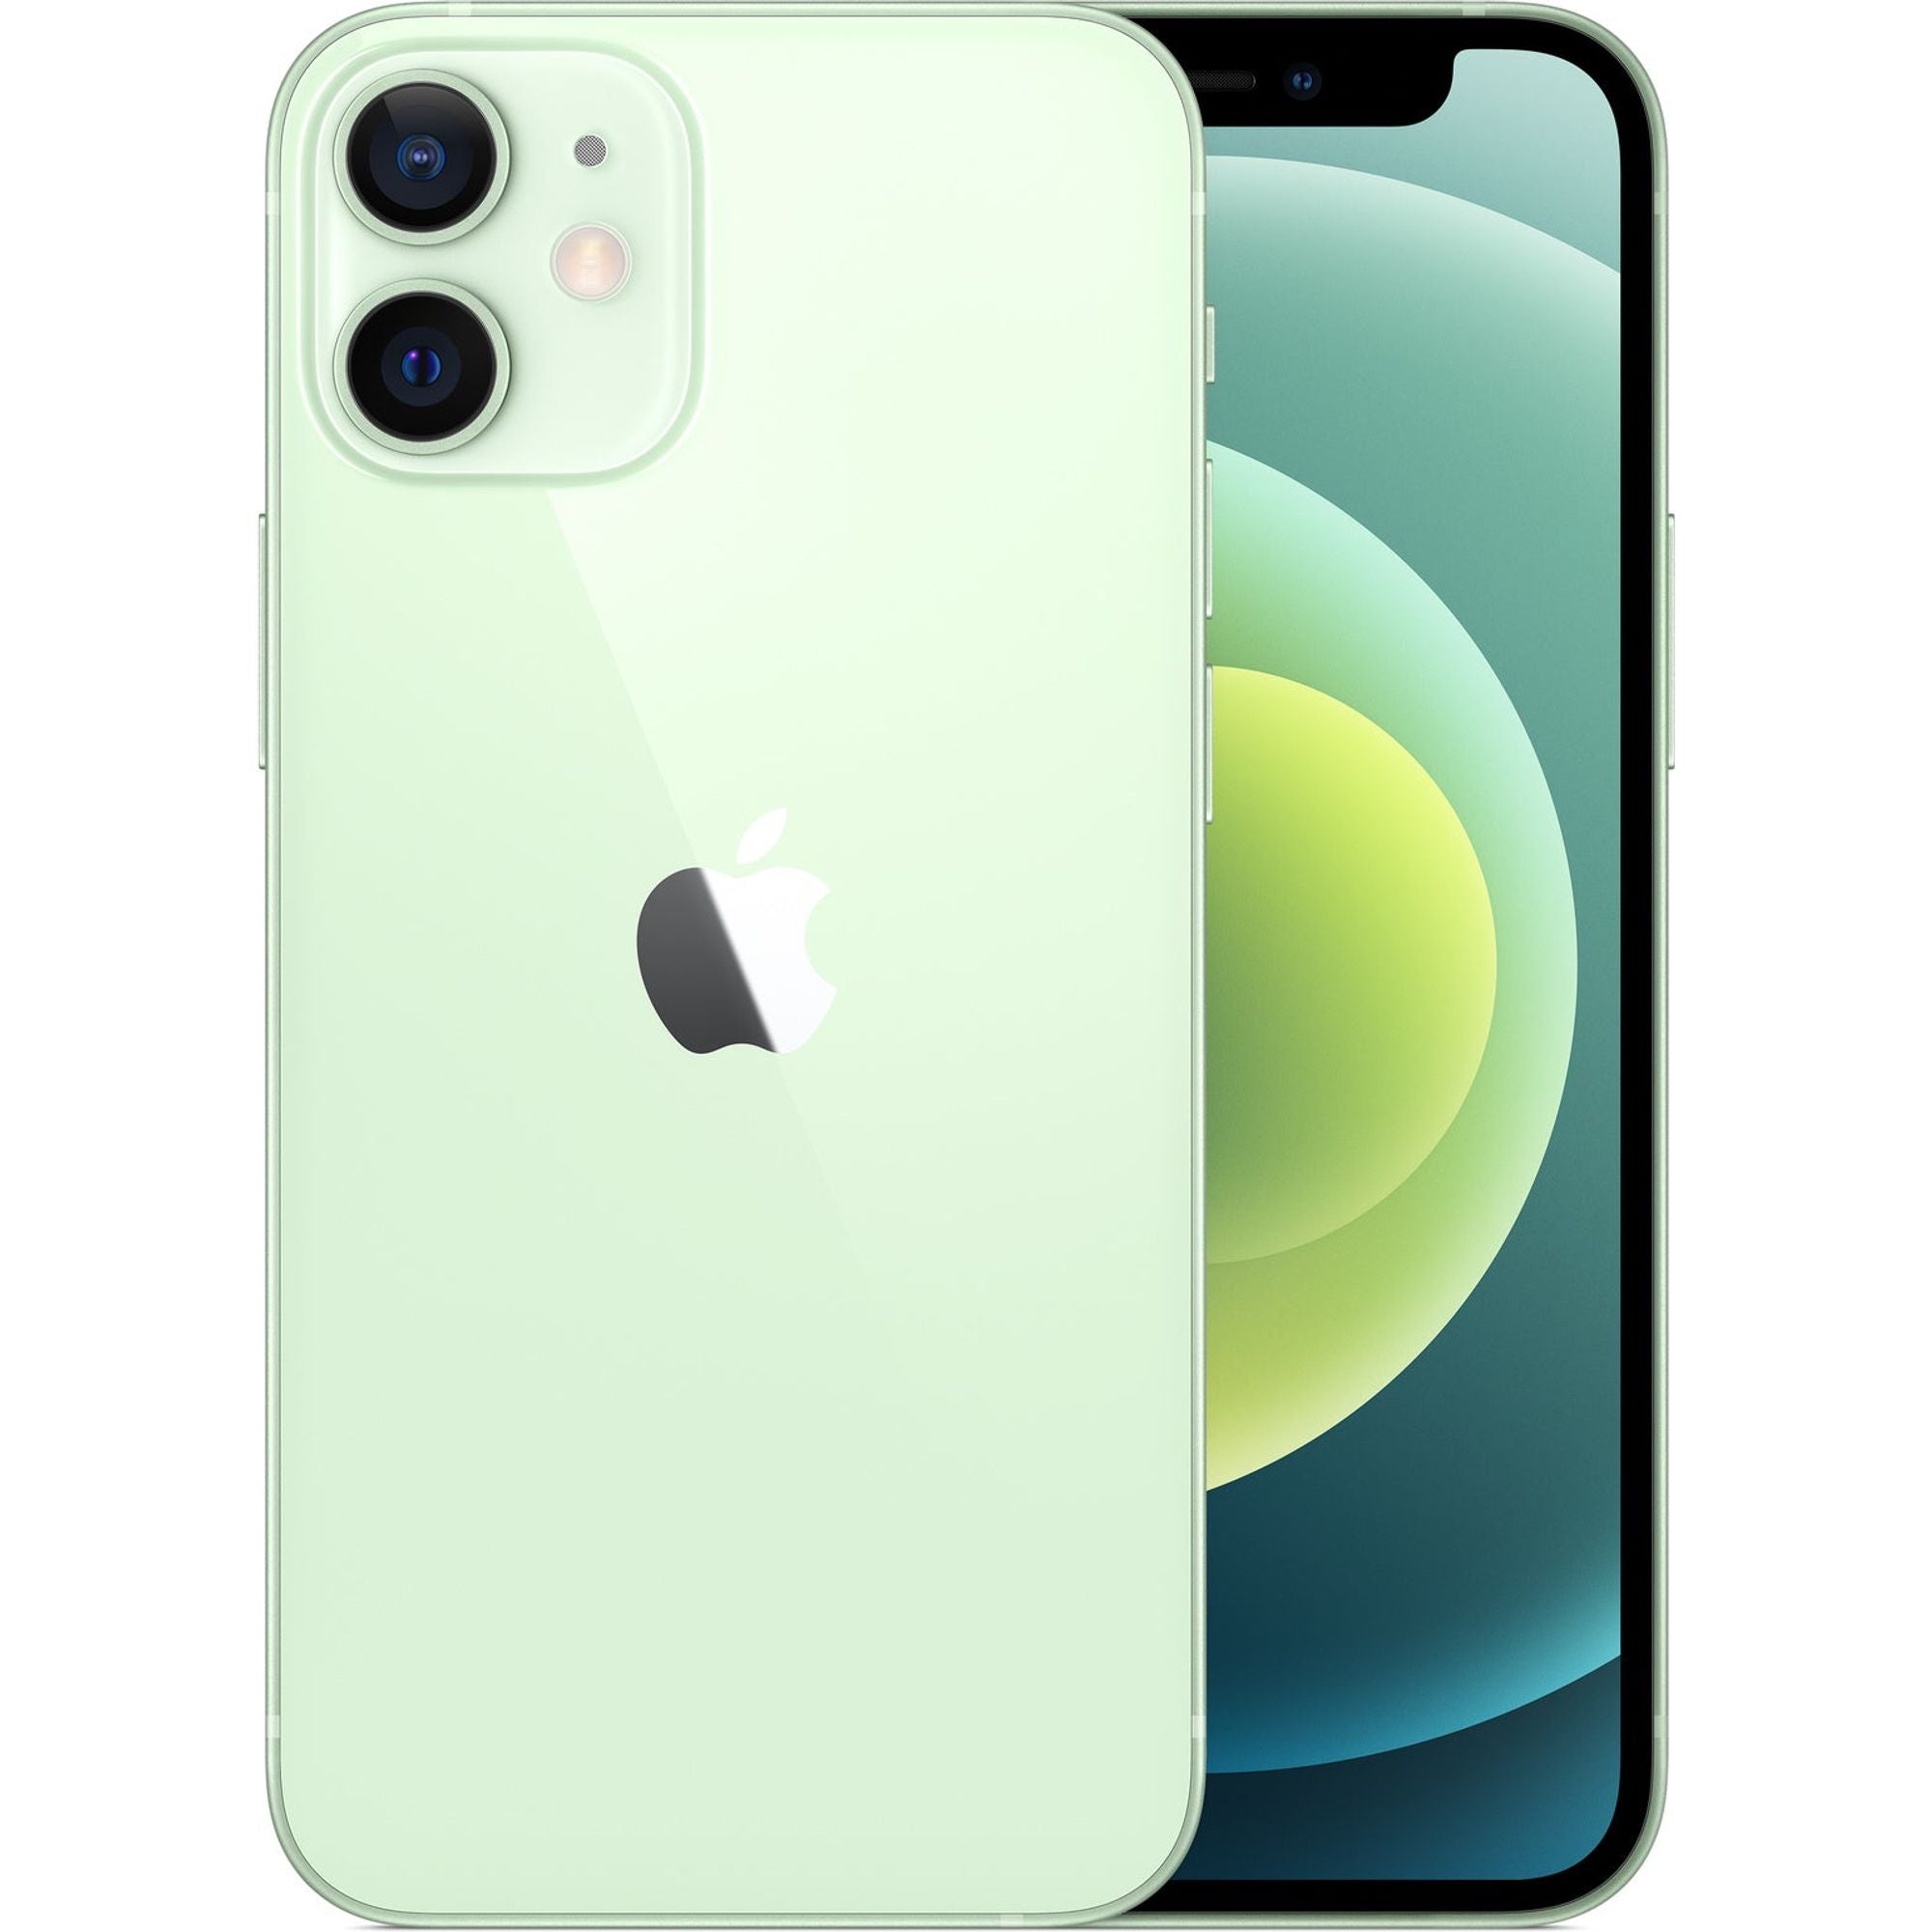 Apple iPhone 12 Mini Unlocked 128GB - Green